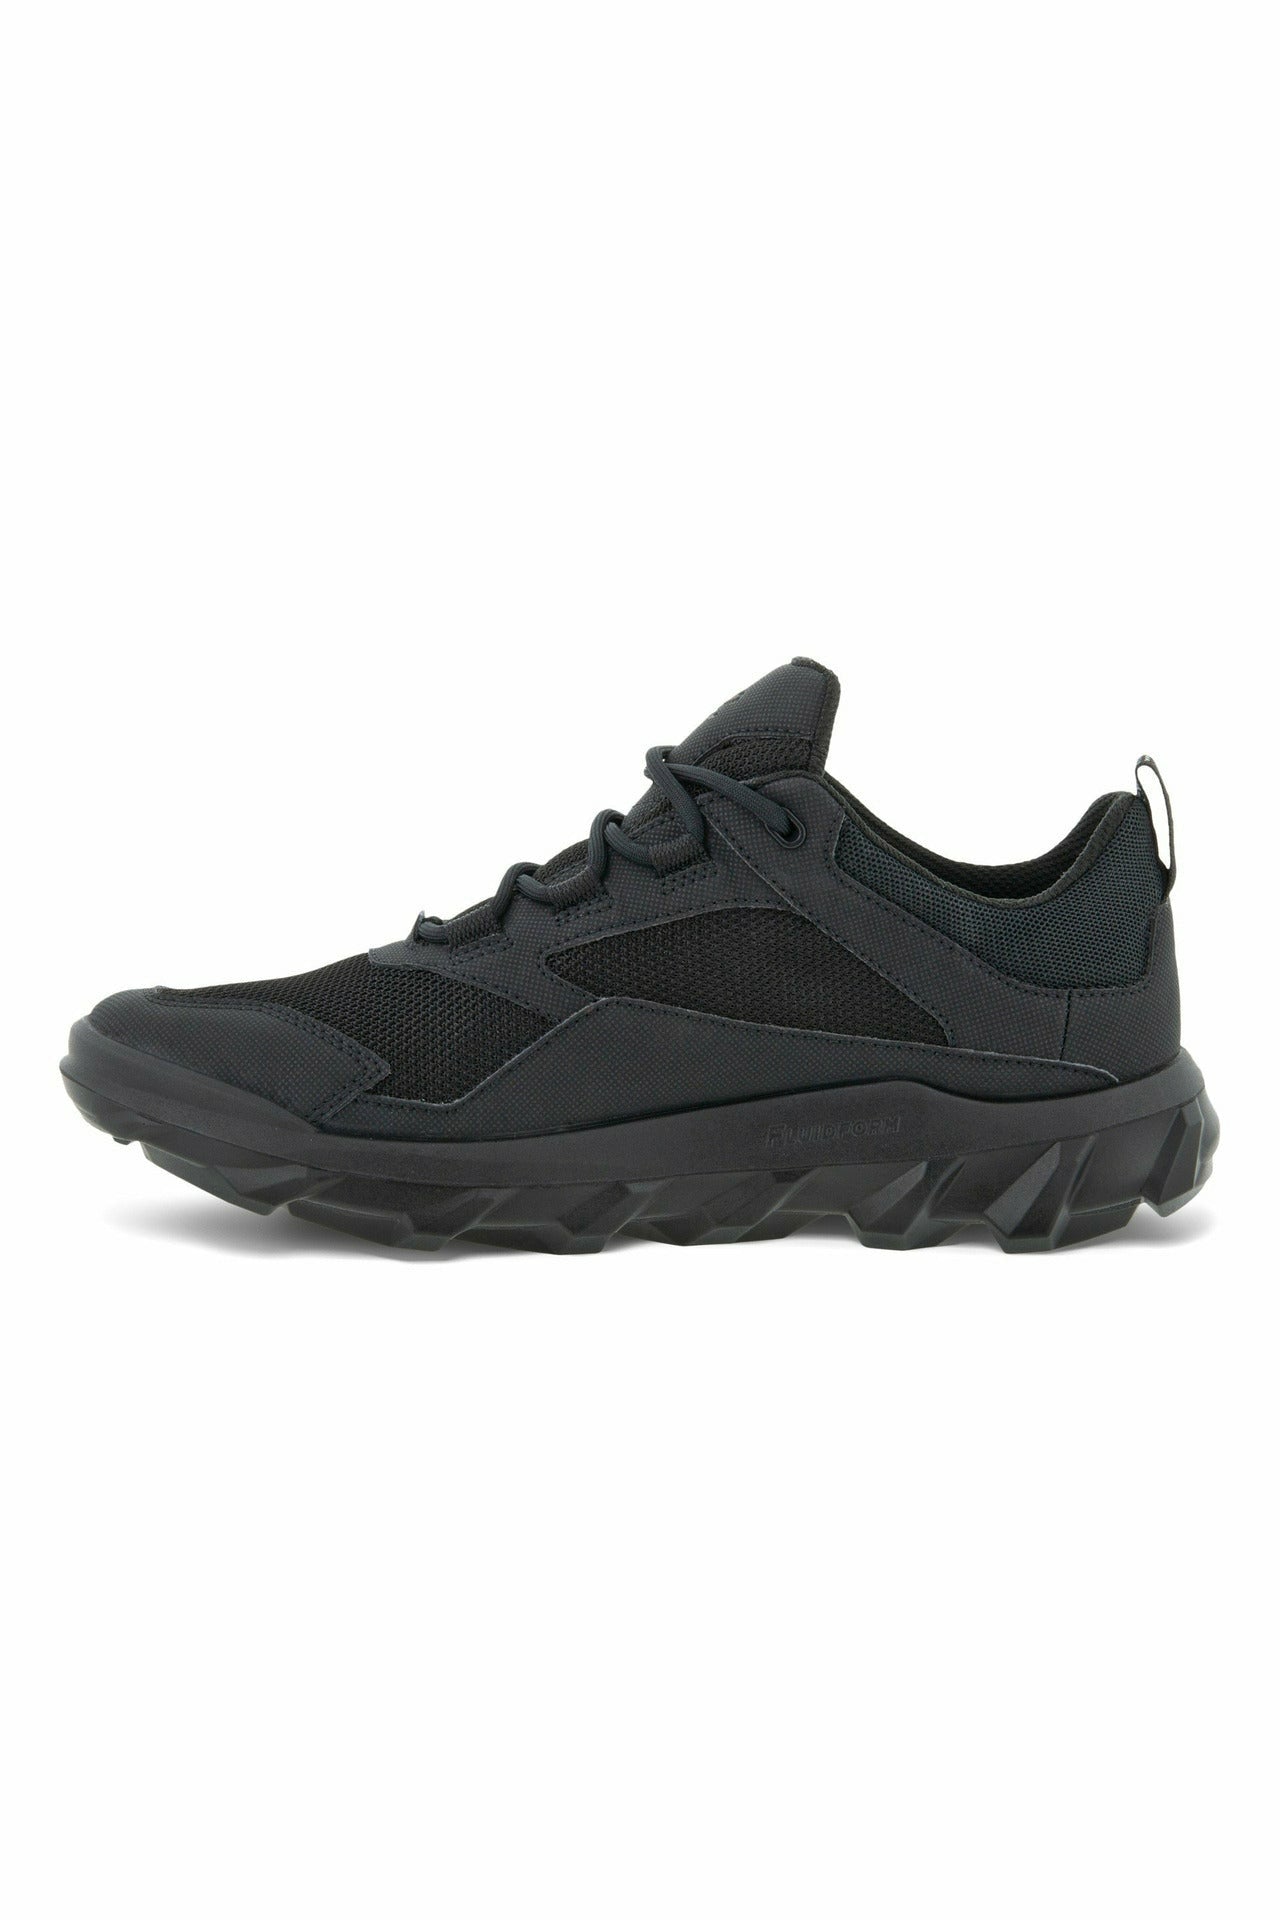 ECCO Mx Waterproof walking shoes 820193-51052 in black